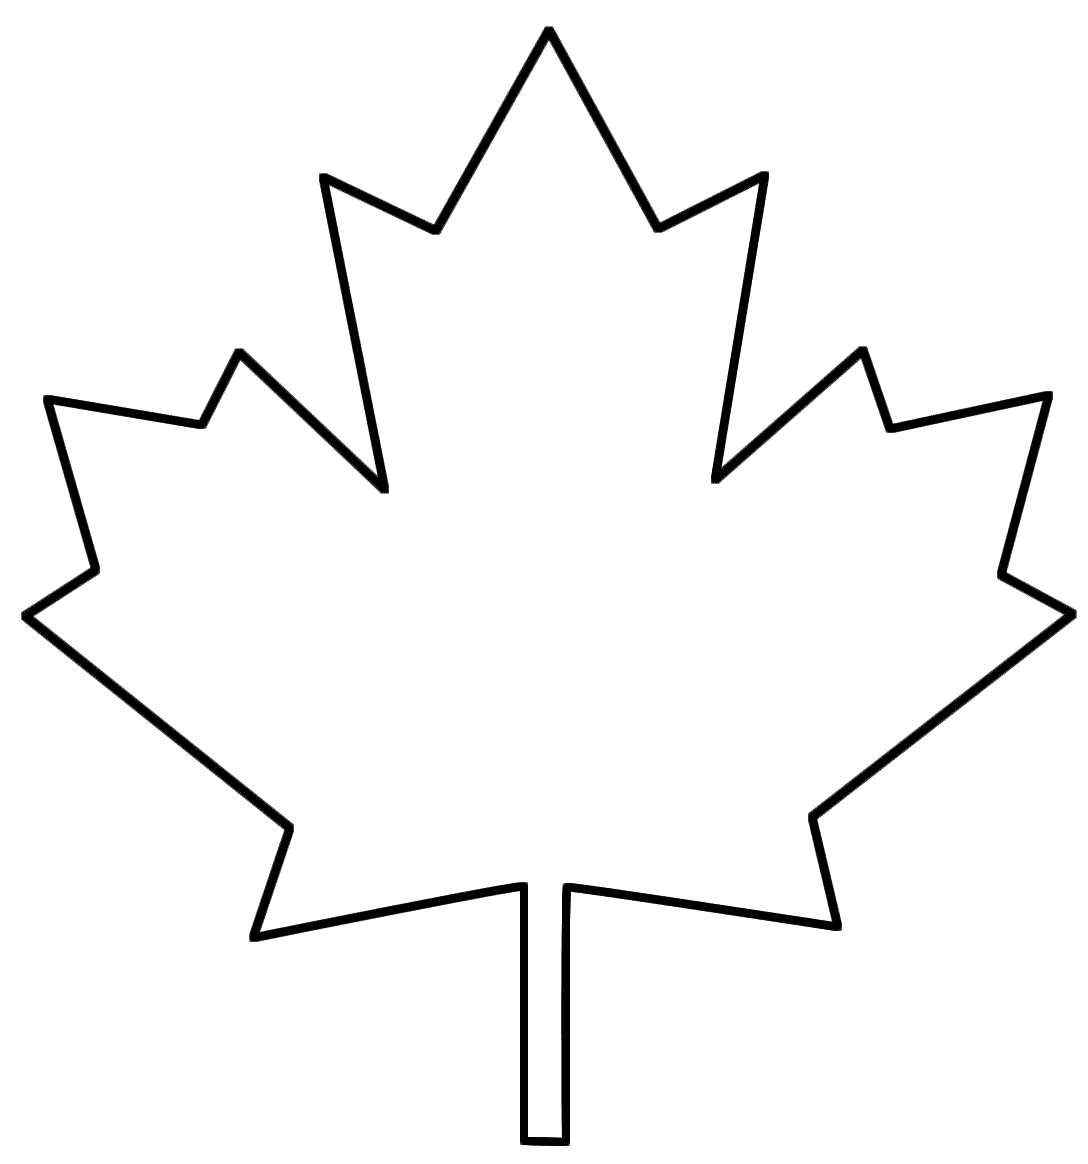 Maple Leaf Clip Art Black And White